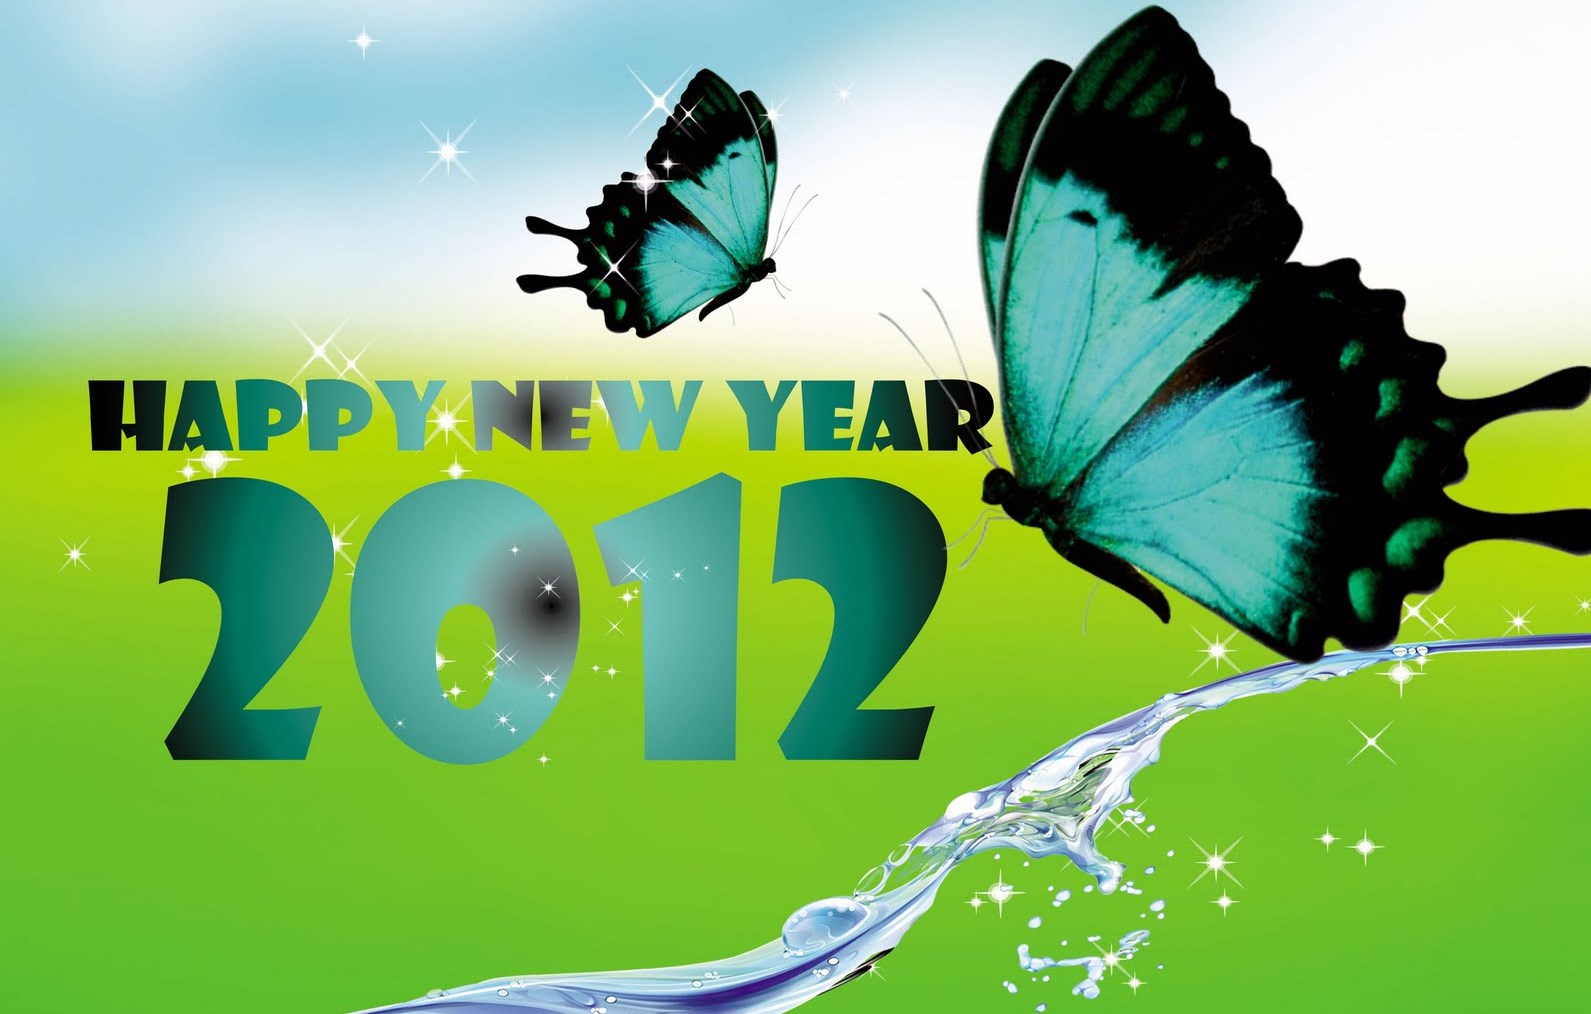 ... Song JeJin_jinyonhae: (Pics) SNSD @ 2012 New Year message wallpaper